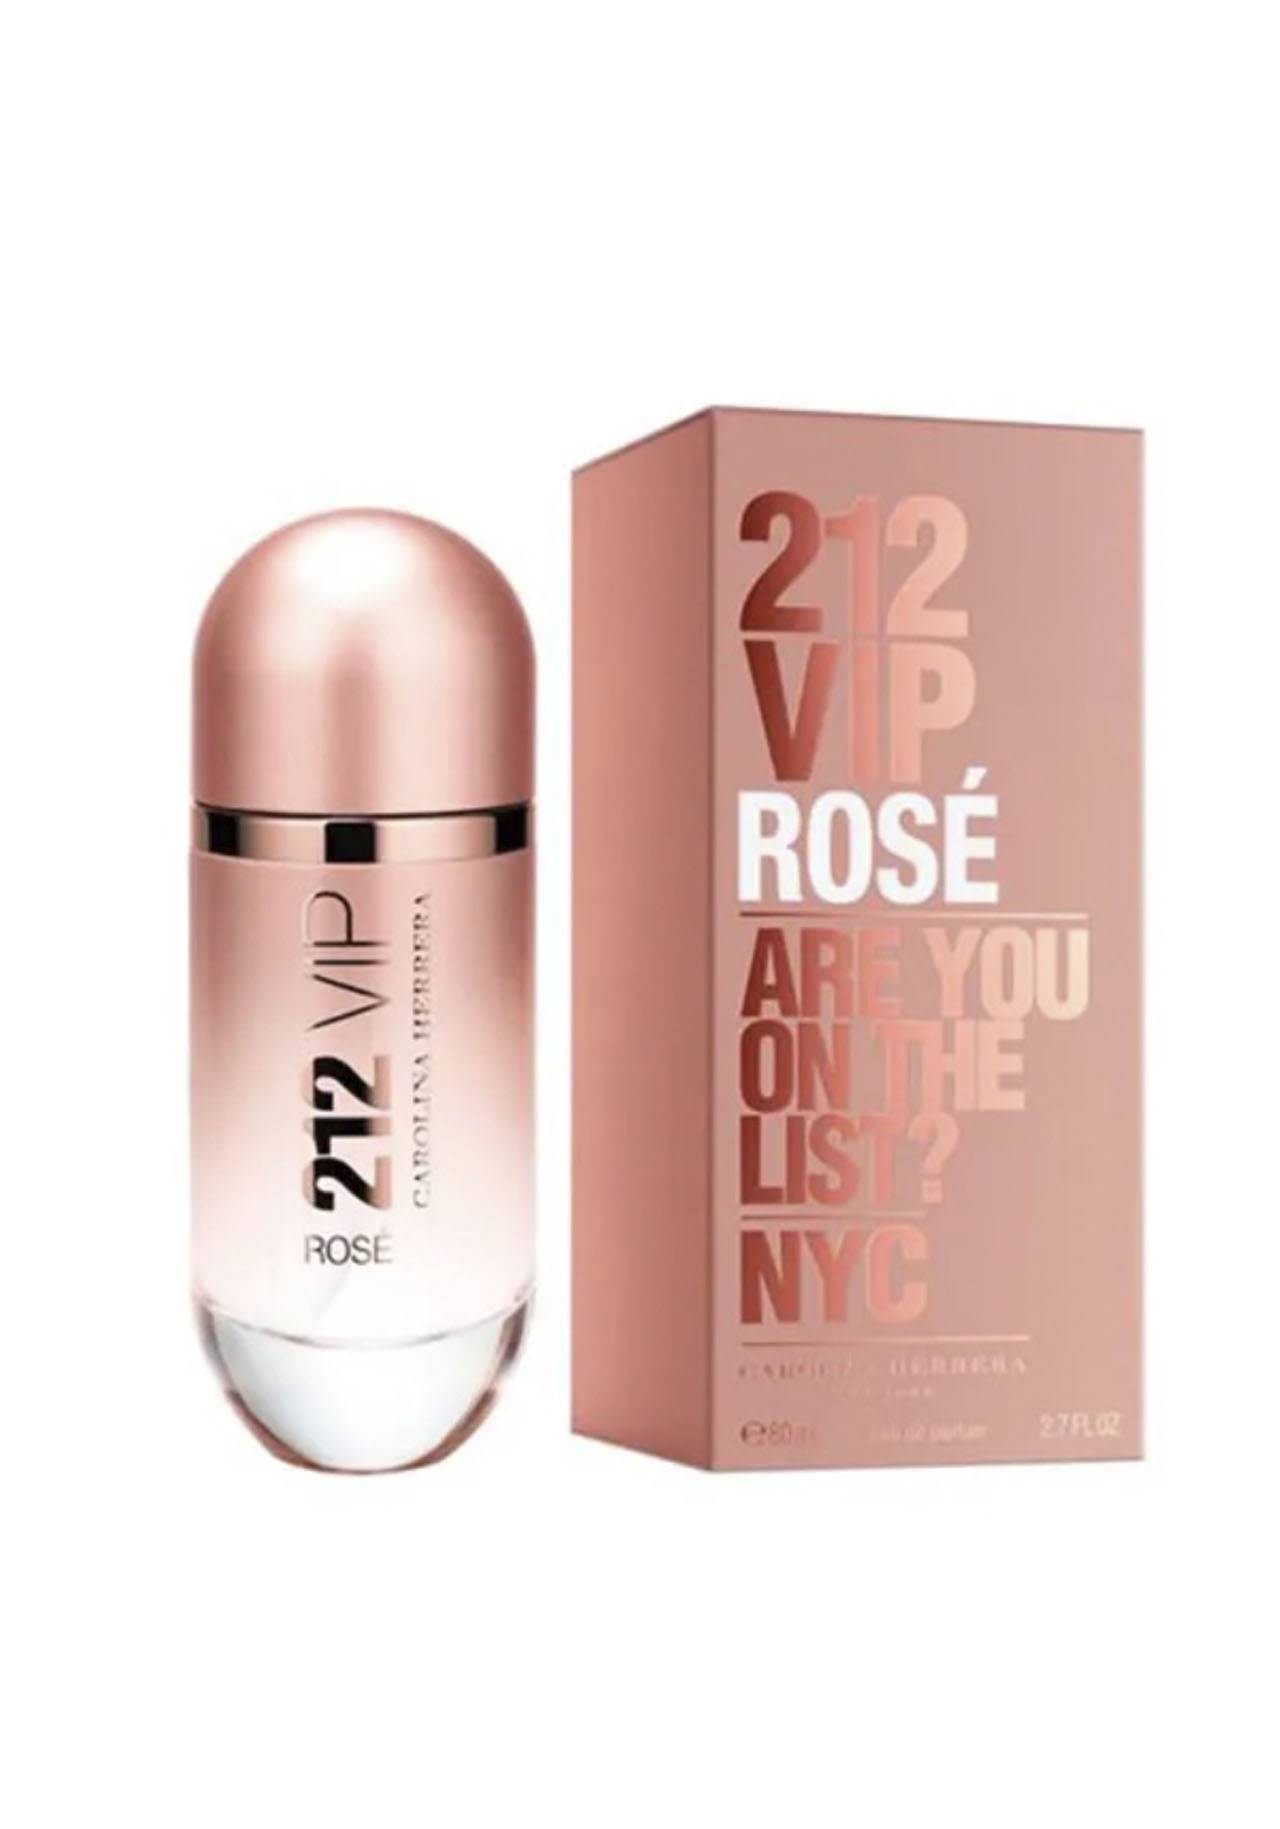 Perfume de otoño: Carolina Herrera 212 VIP Rosé